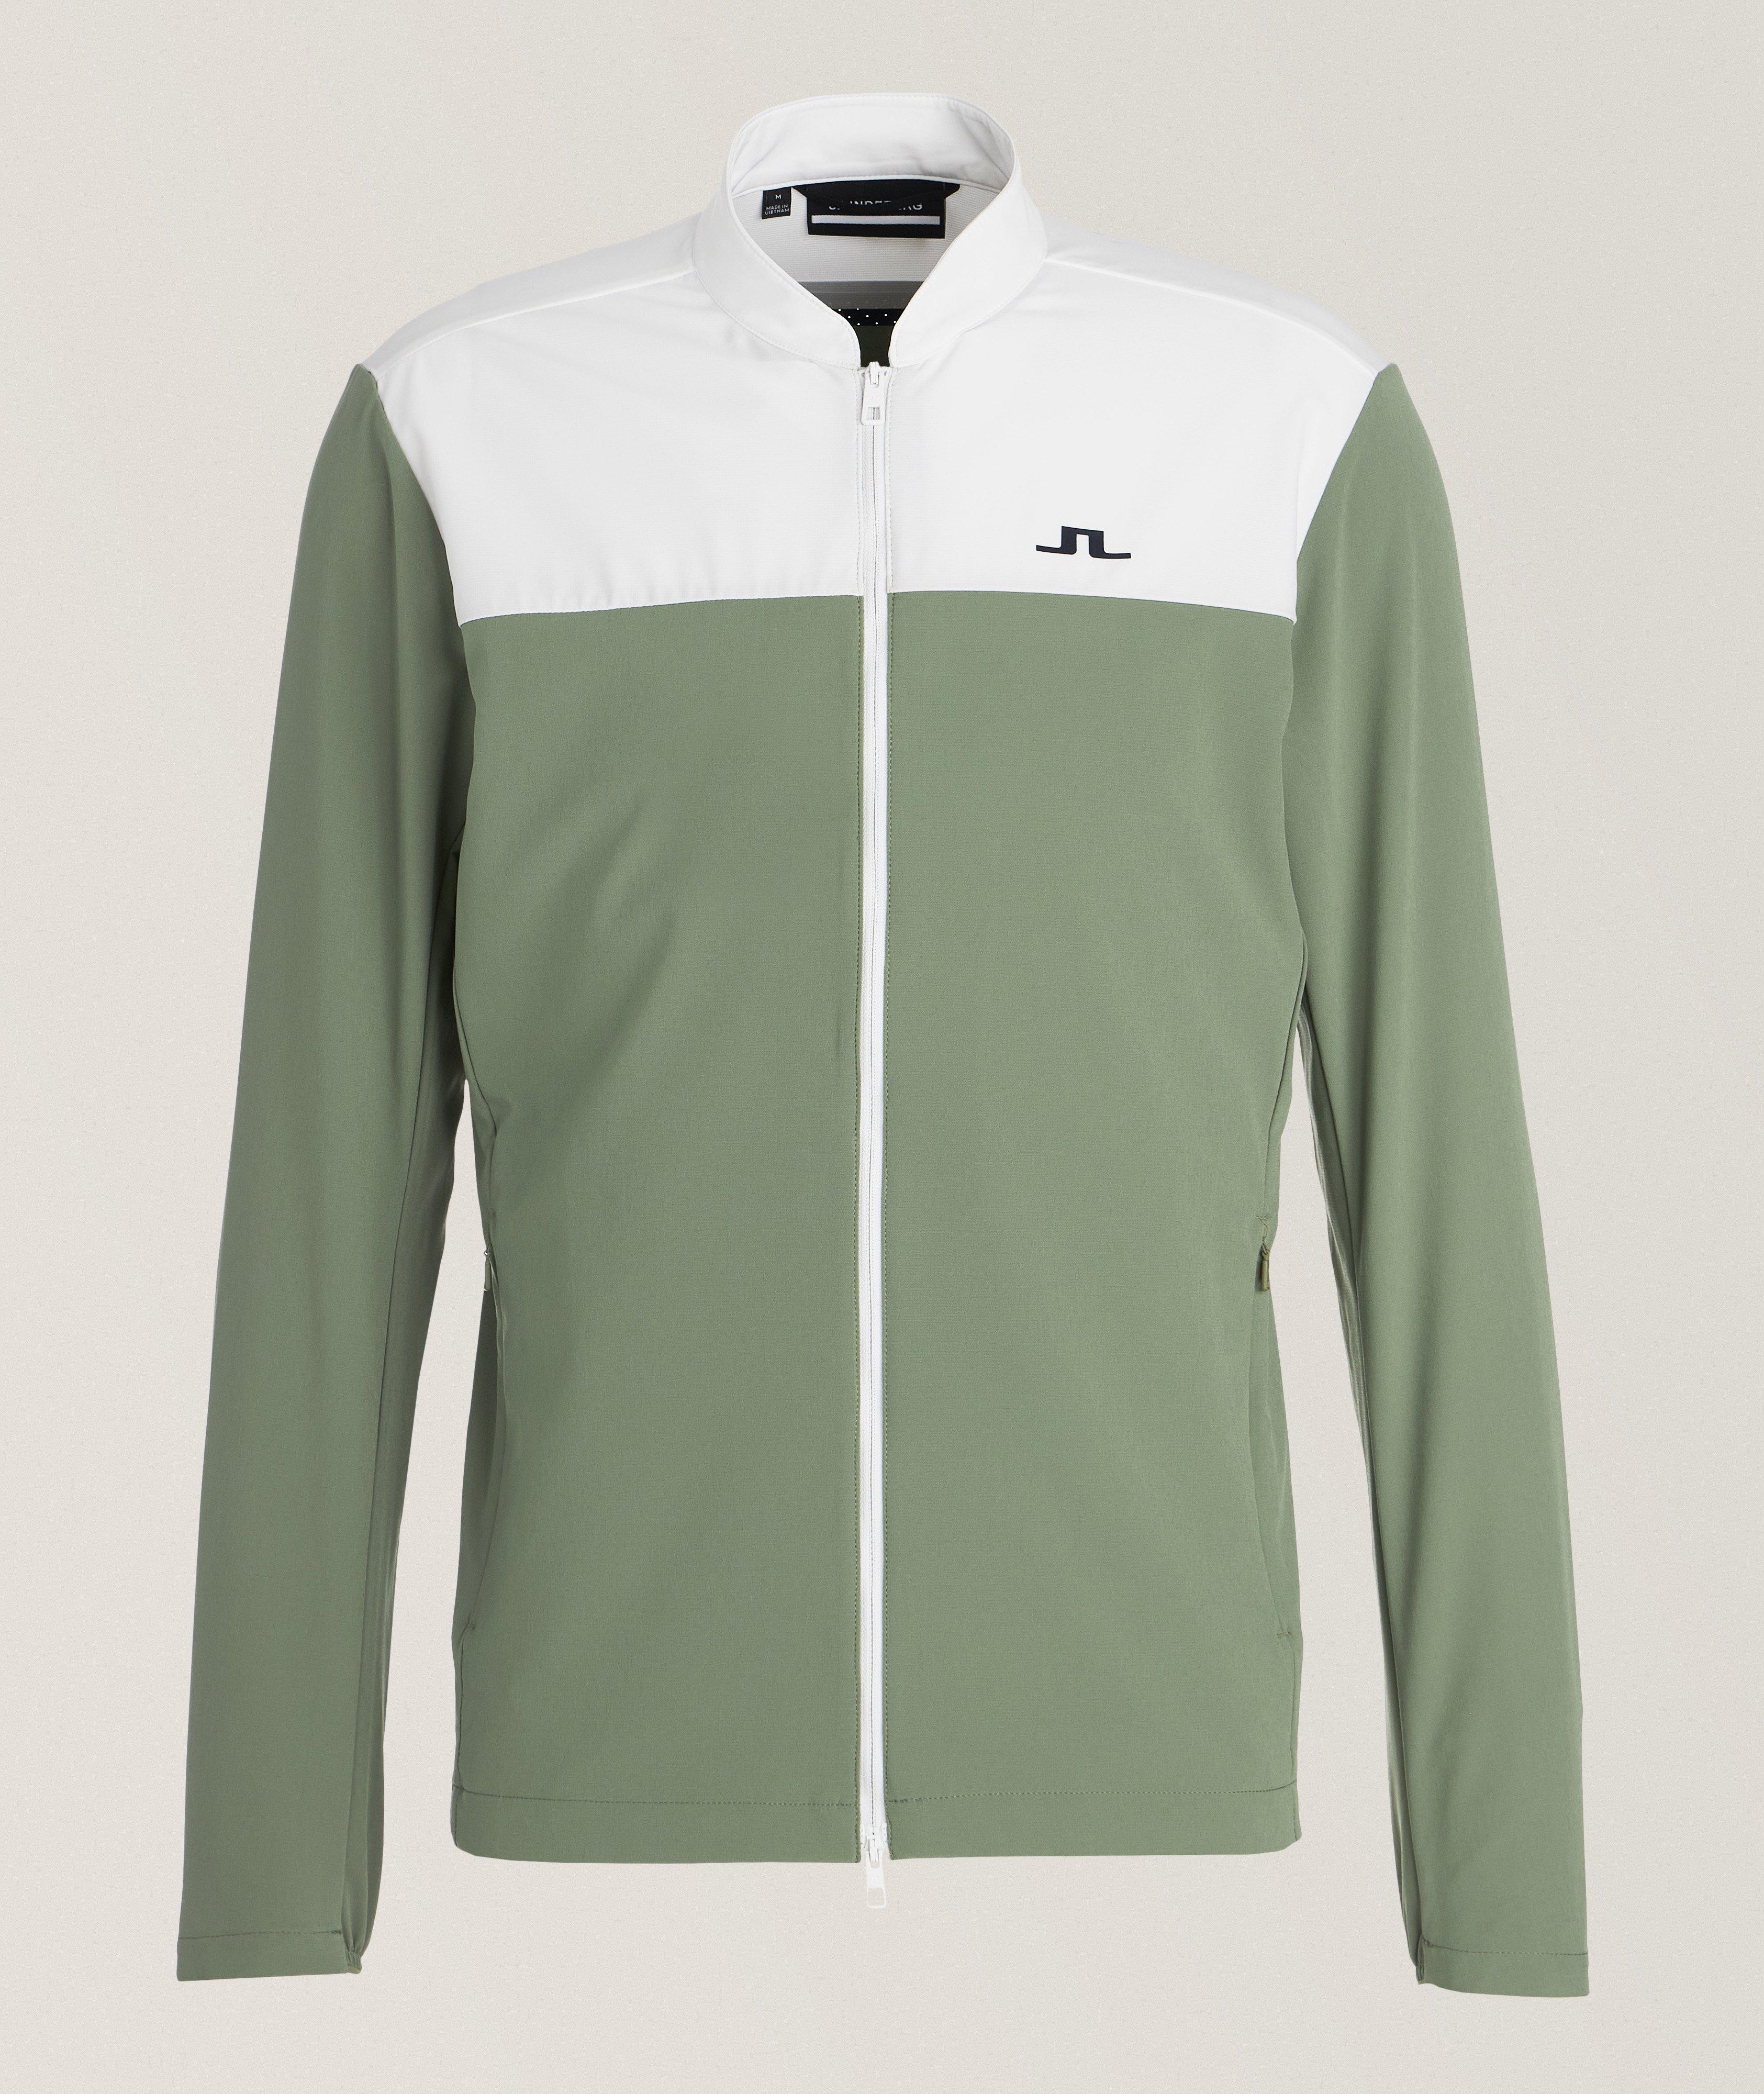 J.Lindeberg Colourblocking Packable Golf Jacket